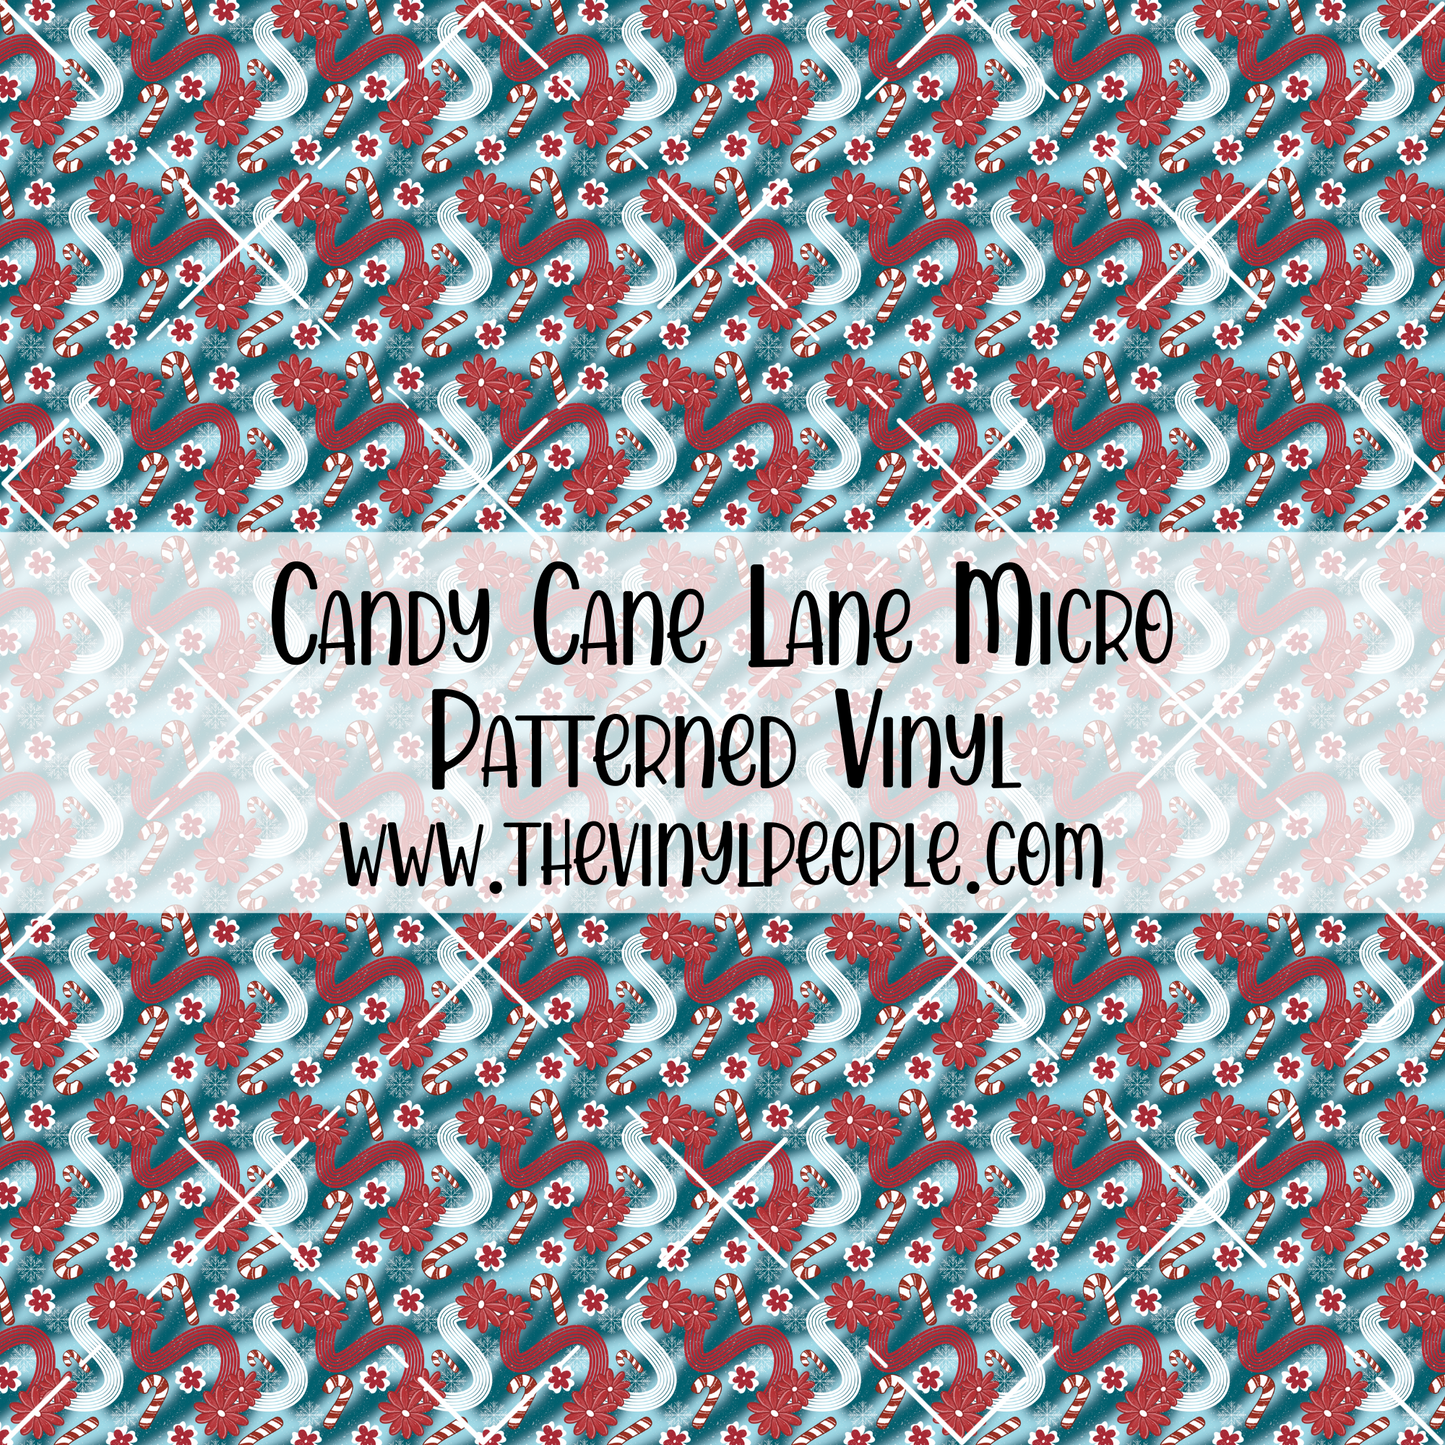 Candy Cane Lane Patterned Vinyl